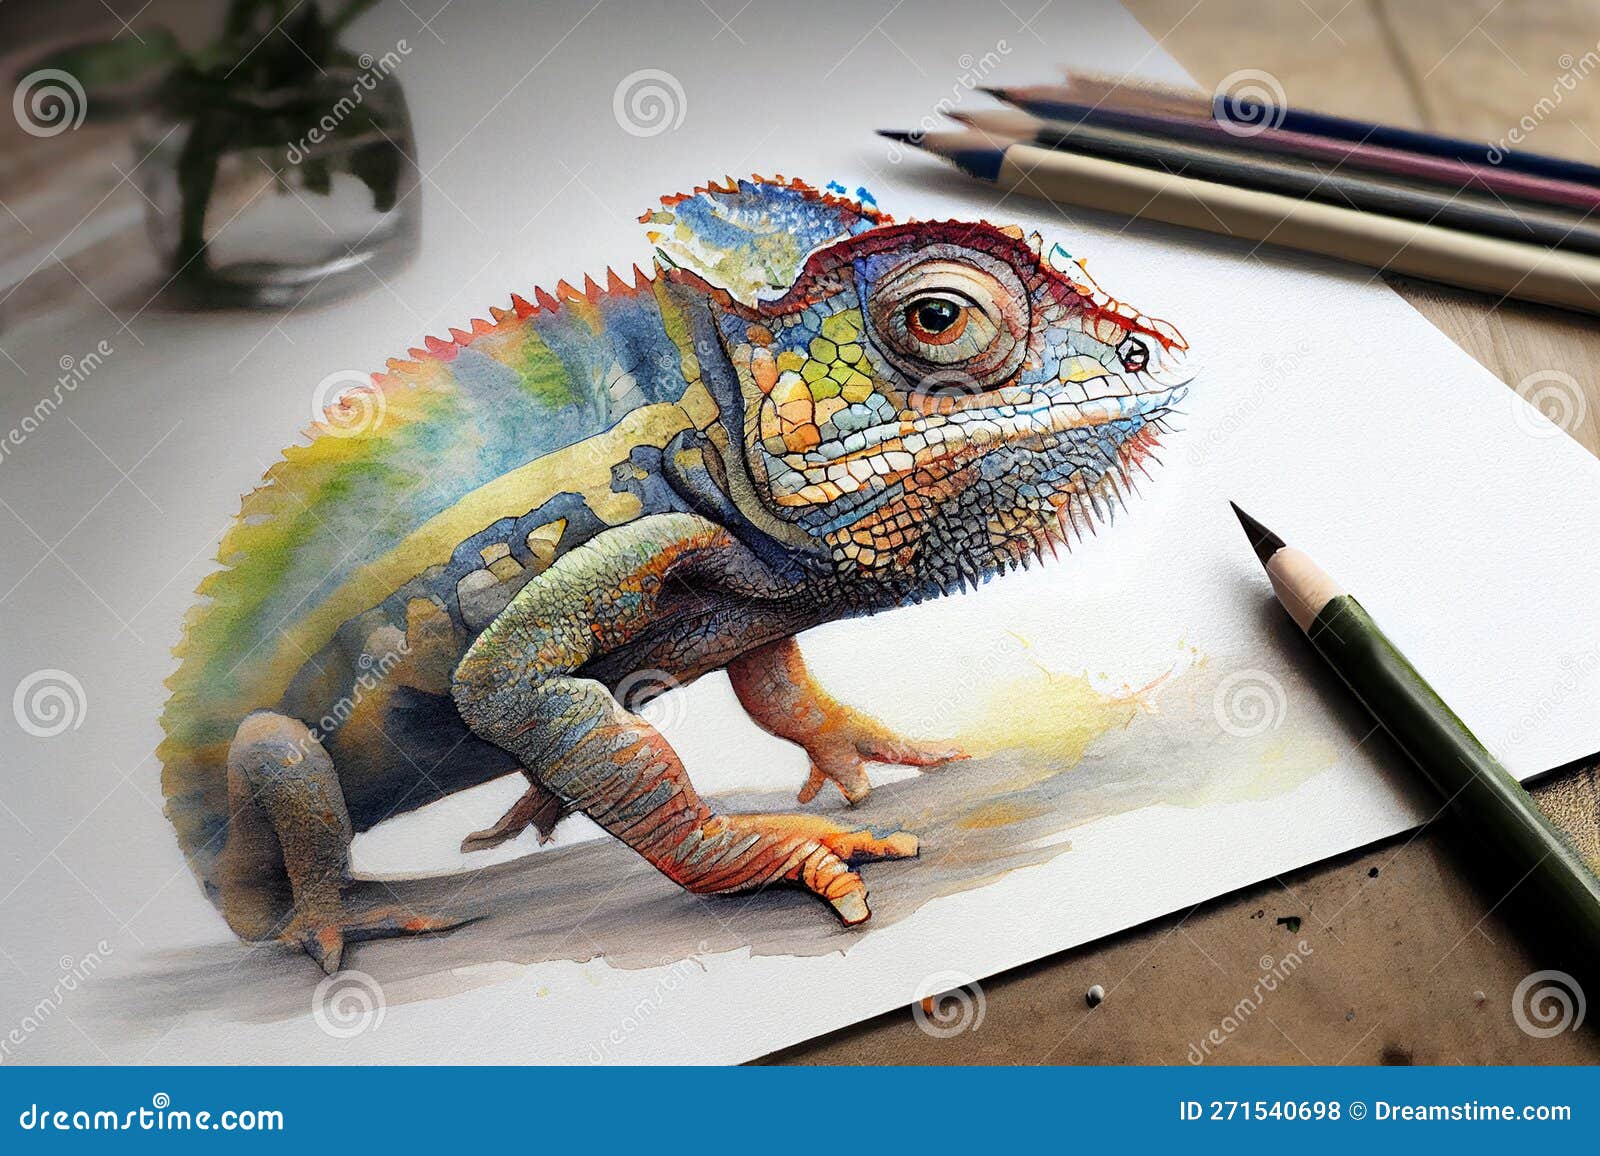 AmbroJordiArt  Chameleon Drawing  Video